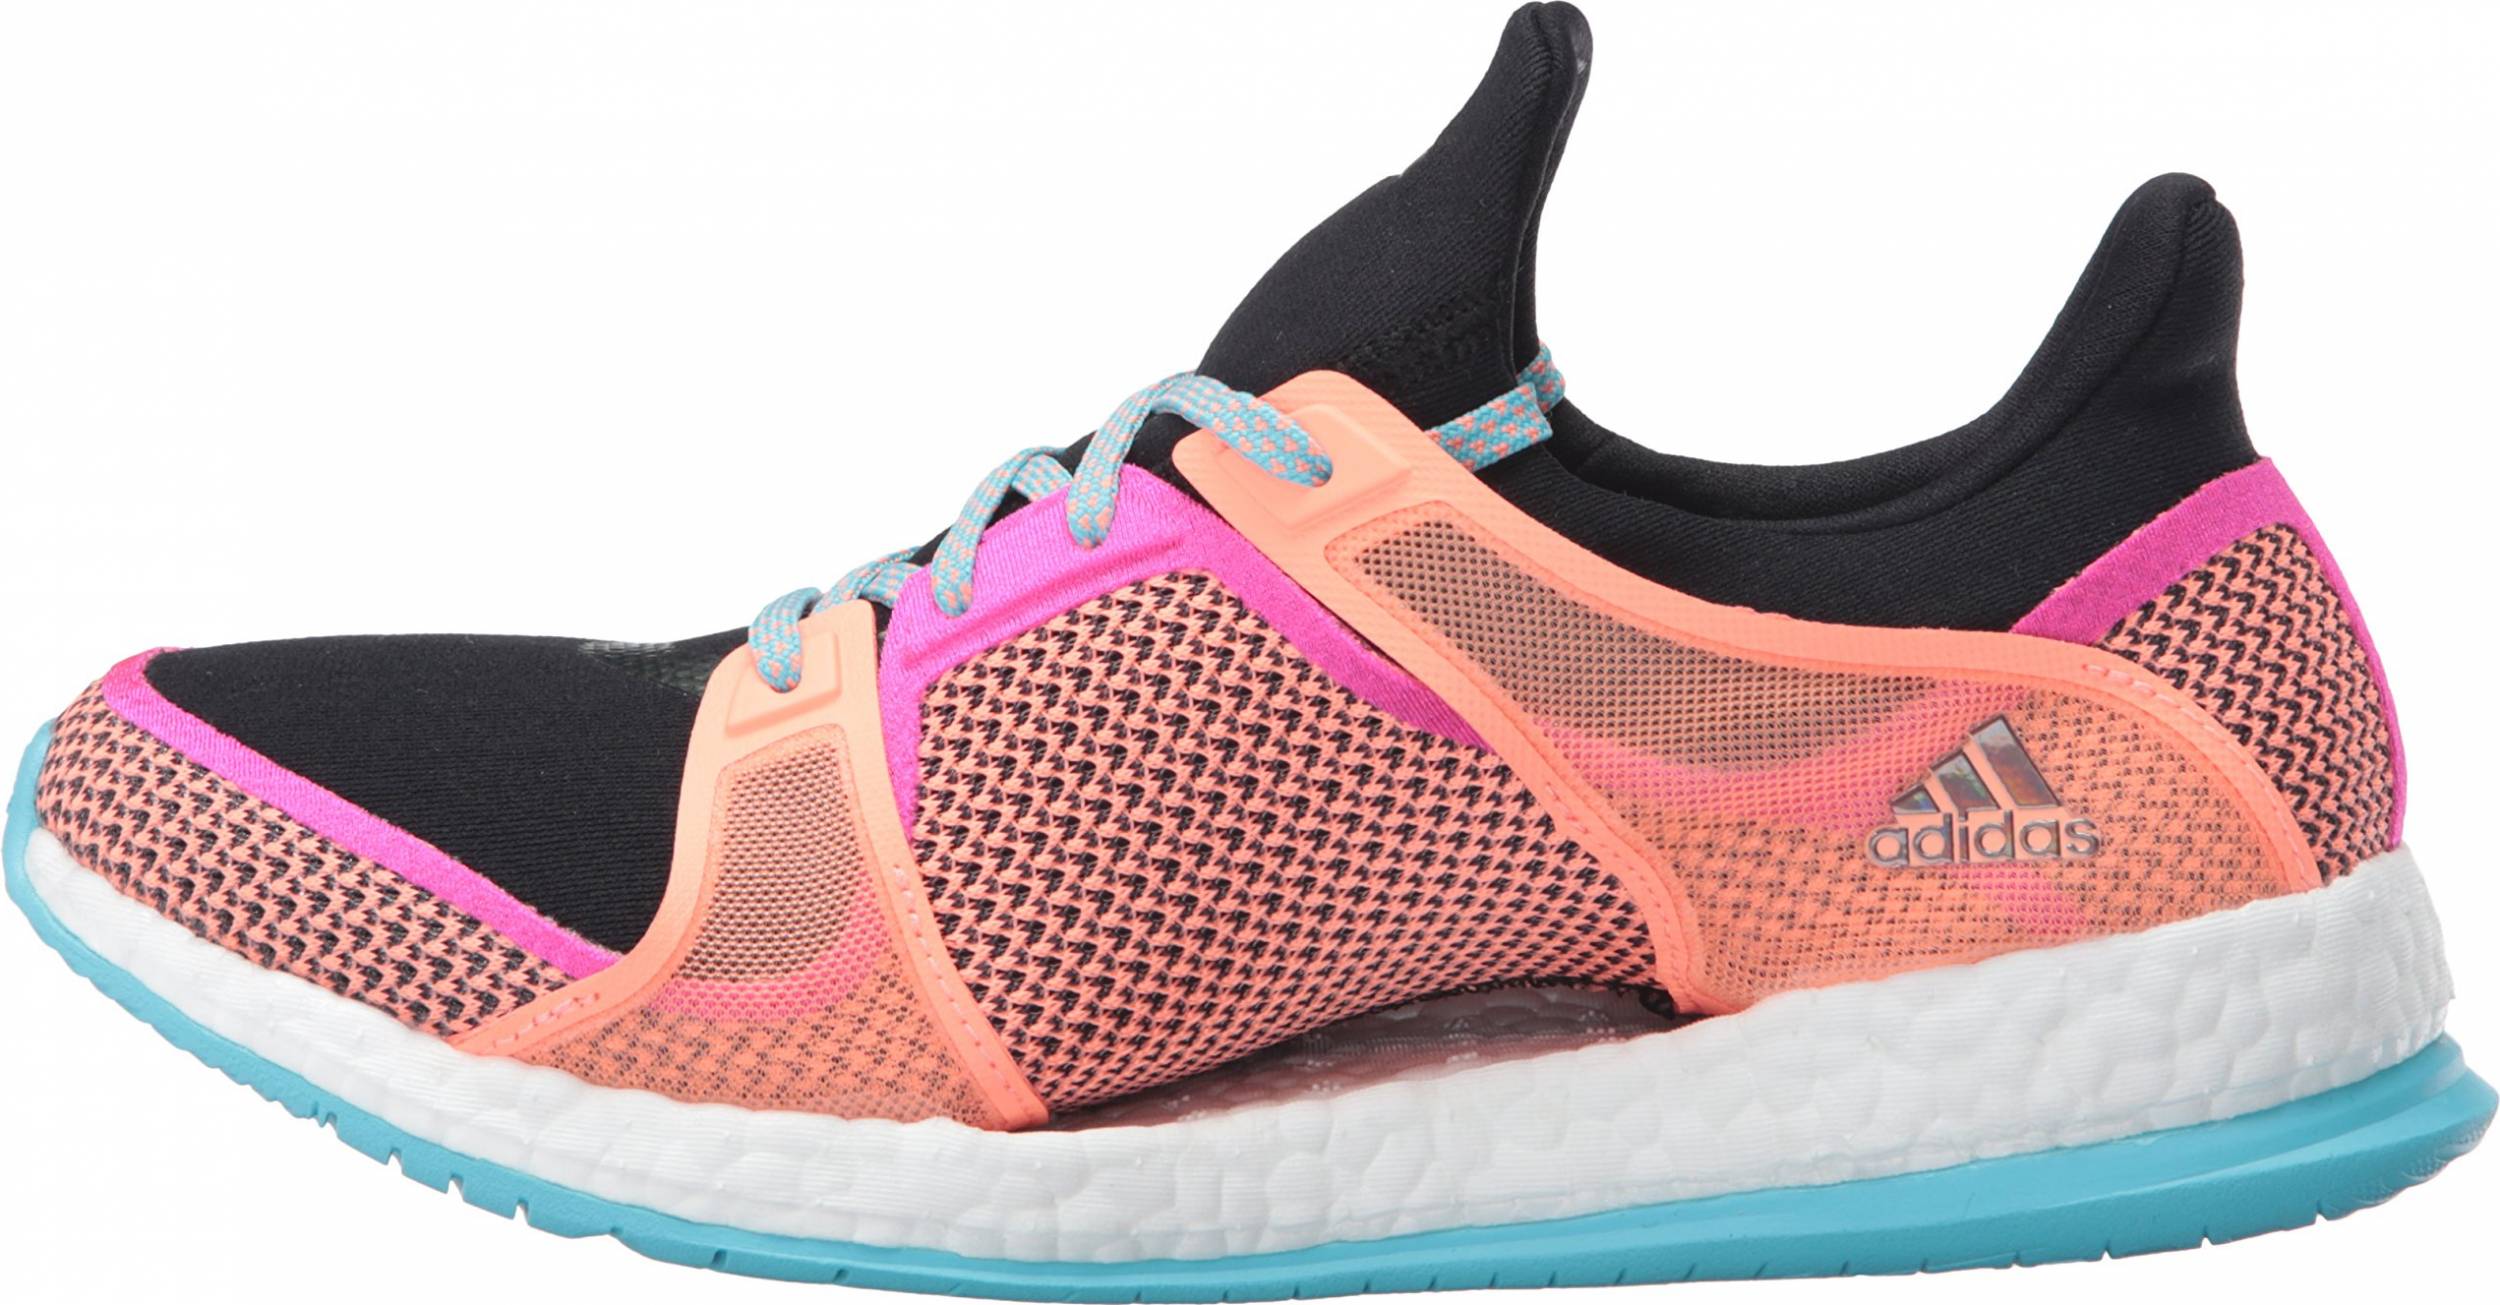 adidas women's pureboost trainer running shoes